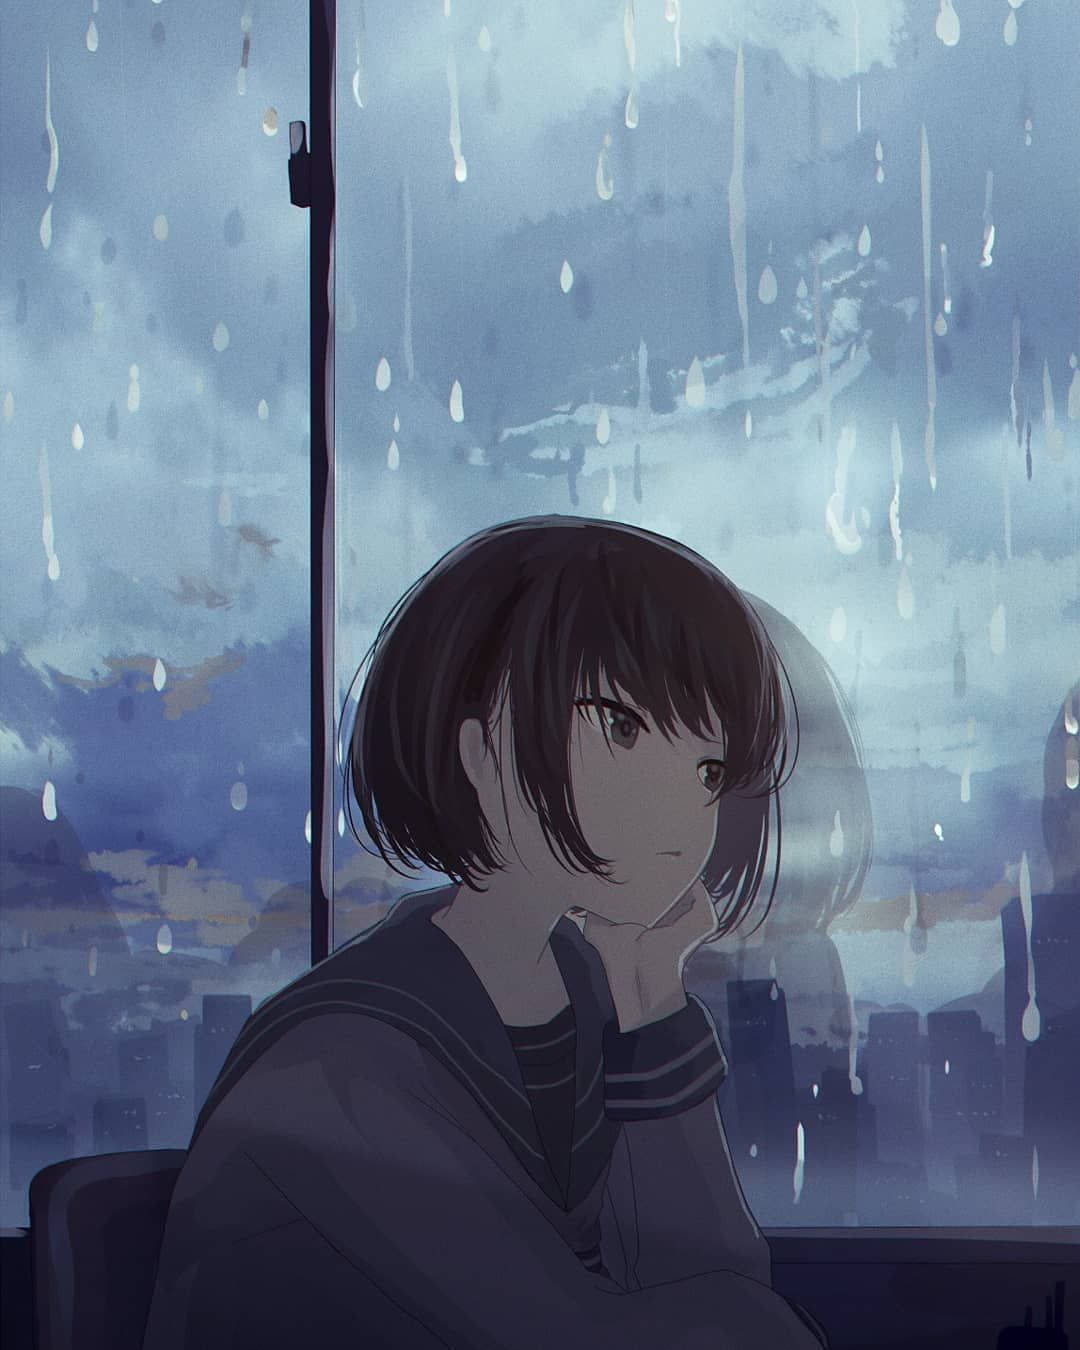 Anime Girl Sad Alone Leaning On Window Raining Wallpaper